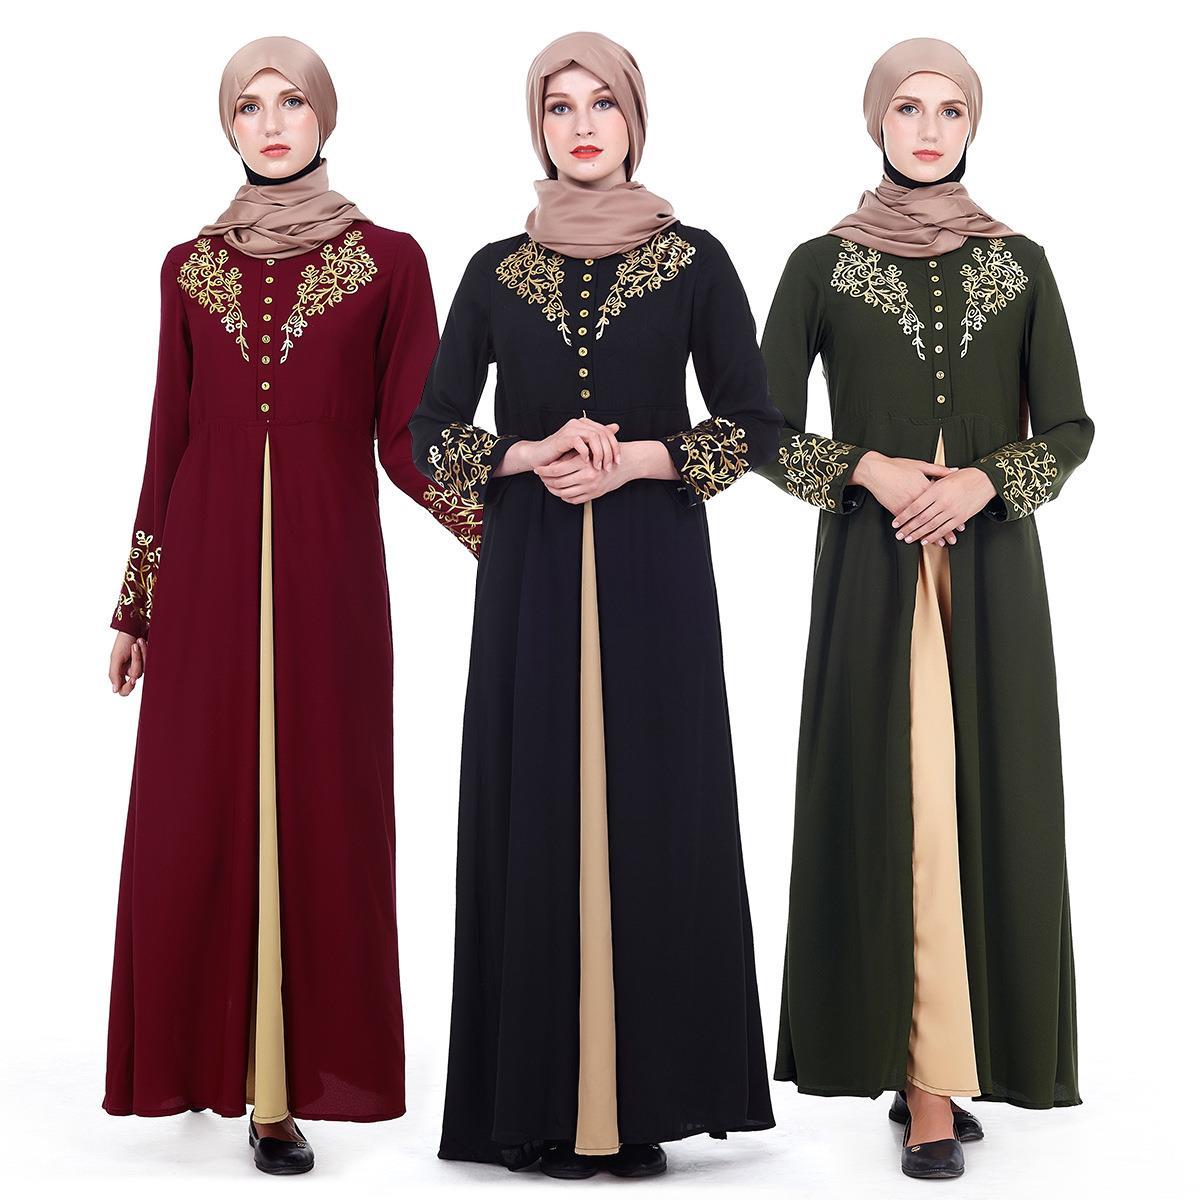 Dubai travel clothing women's robes UAE mosque Muslim Hui clothing muslimdress